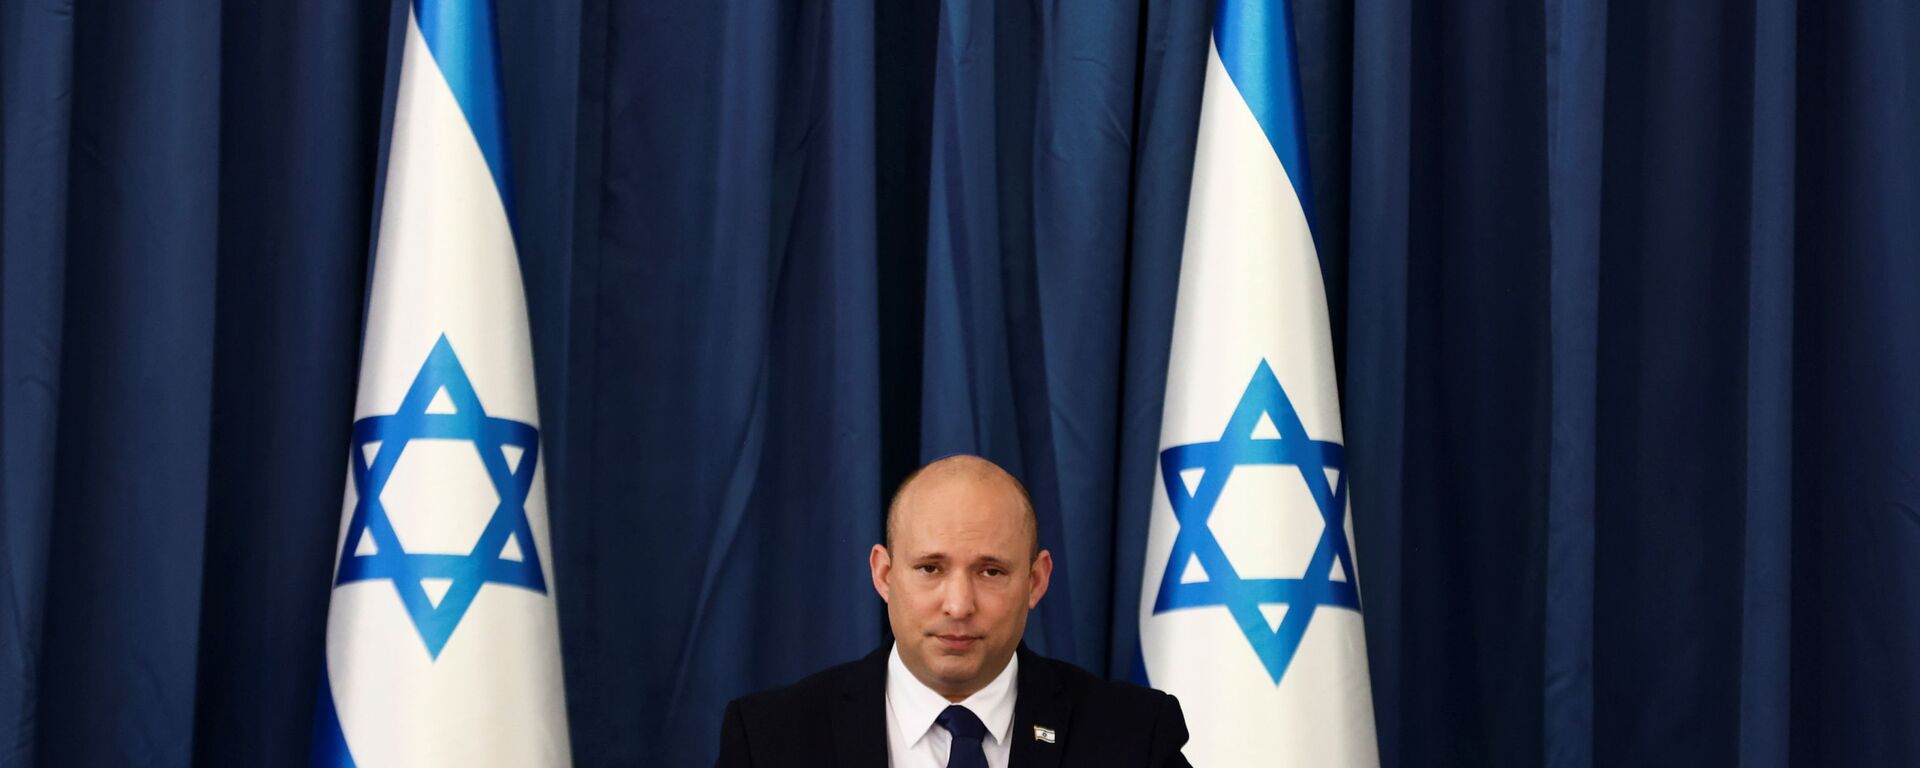 Israeli Prime Minister Naftali Bennett speaks at the weekly cabinet meeting at the Foreign Ministry in Jerusalem August 8, 2021. REUTERS/Ronen Zvulun/Pool - Sputnik International, 1920, 10.01.2022